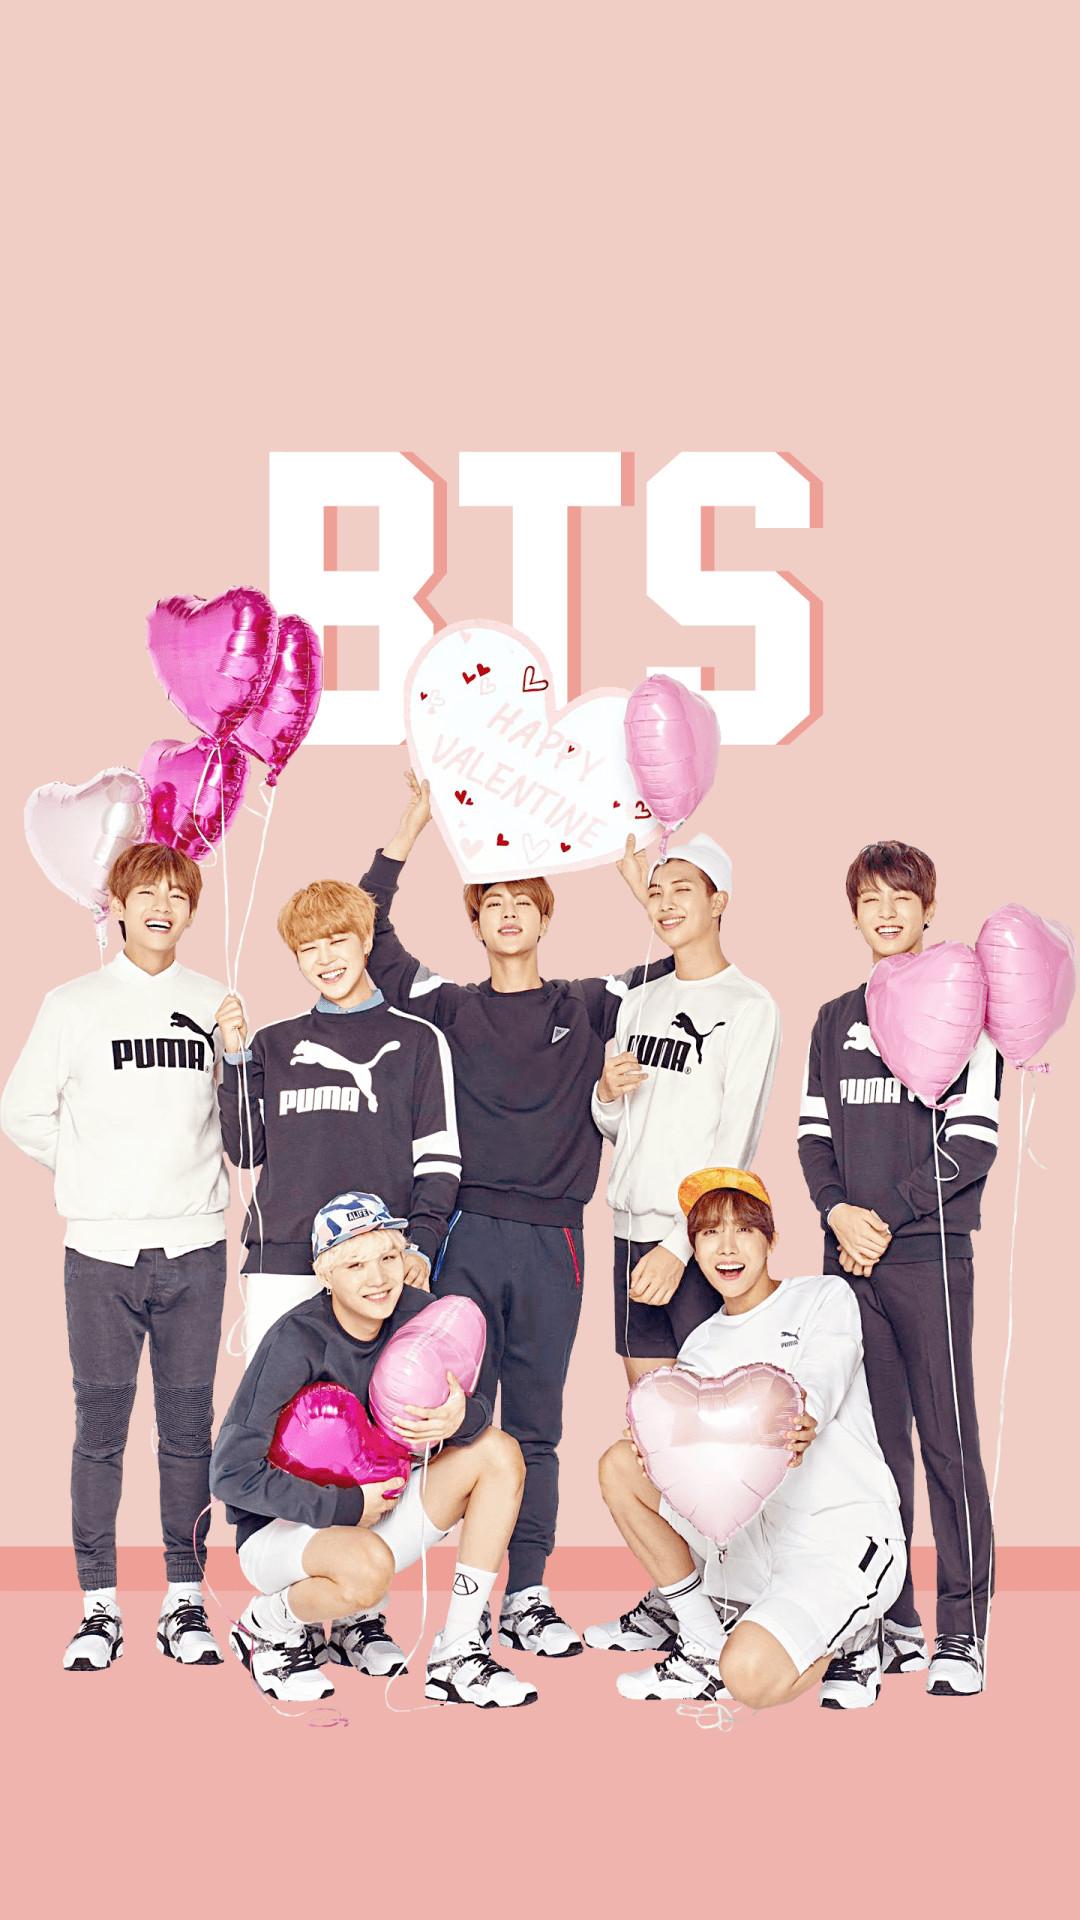 BTS Logo Wallpapers - Top 20 Best BTS Logo Backgrounds Download